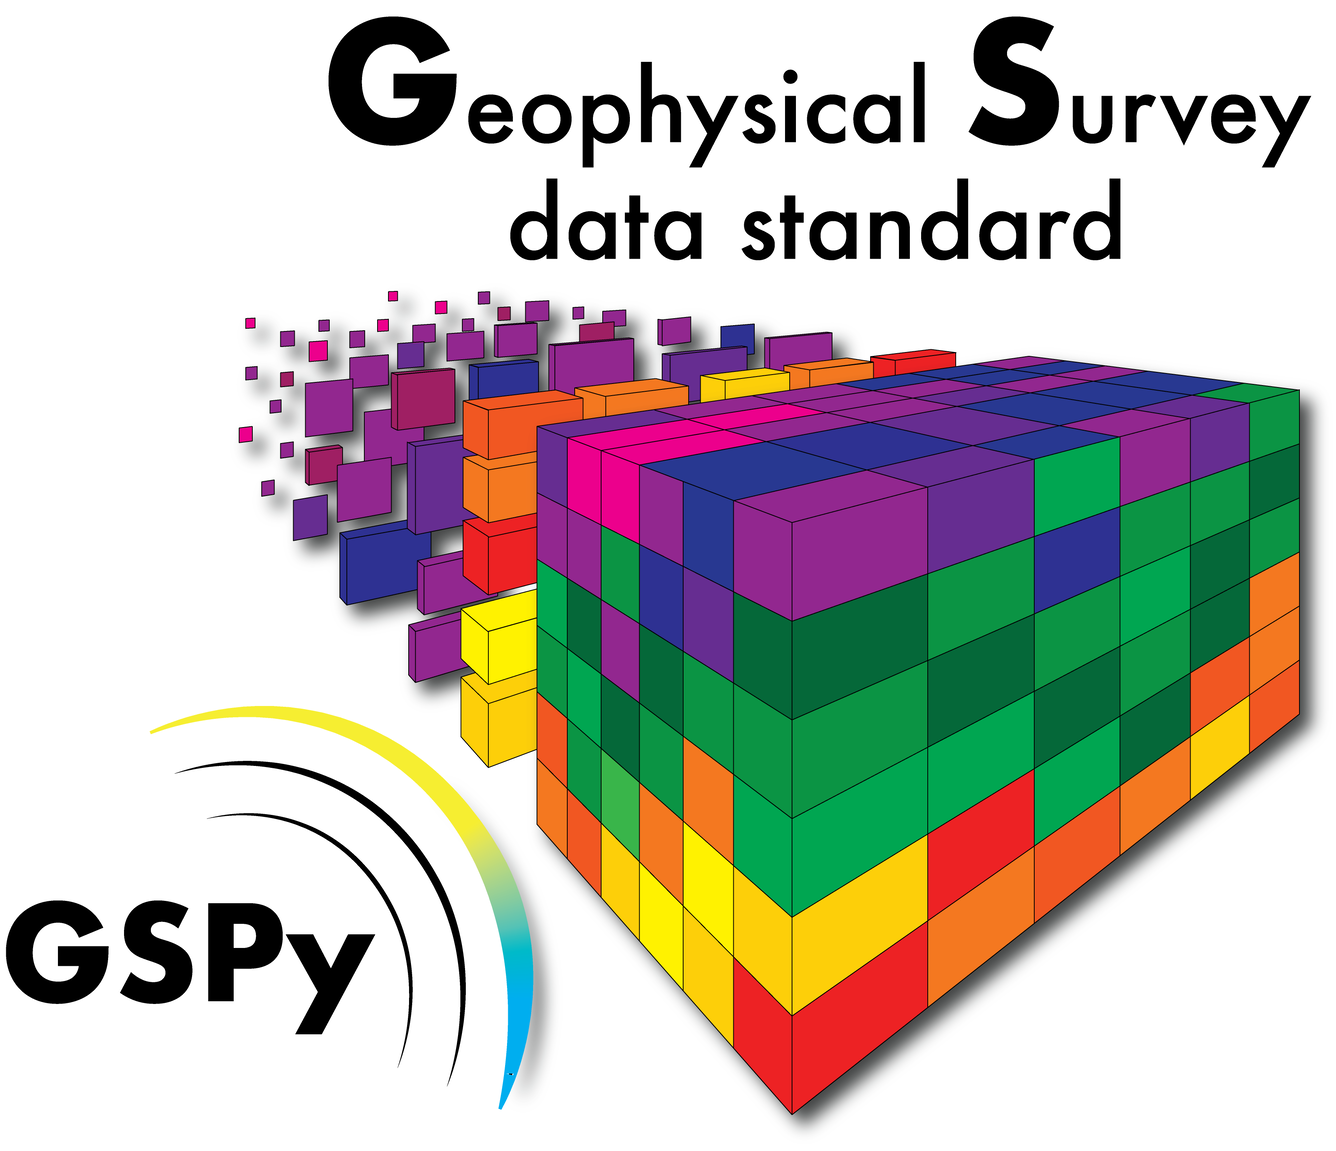 Geophysical Survey data standard (GSPy) graphic